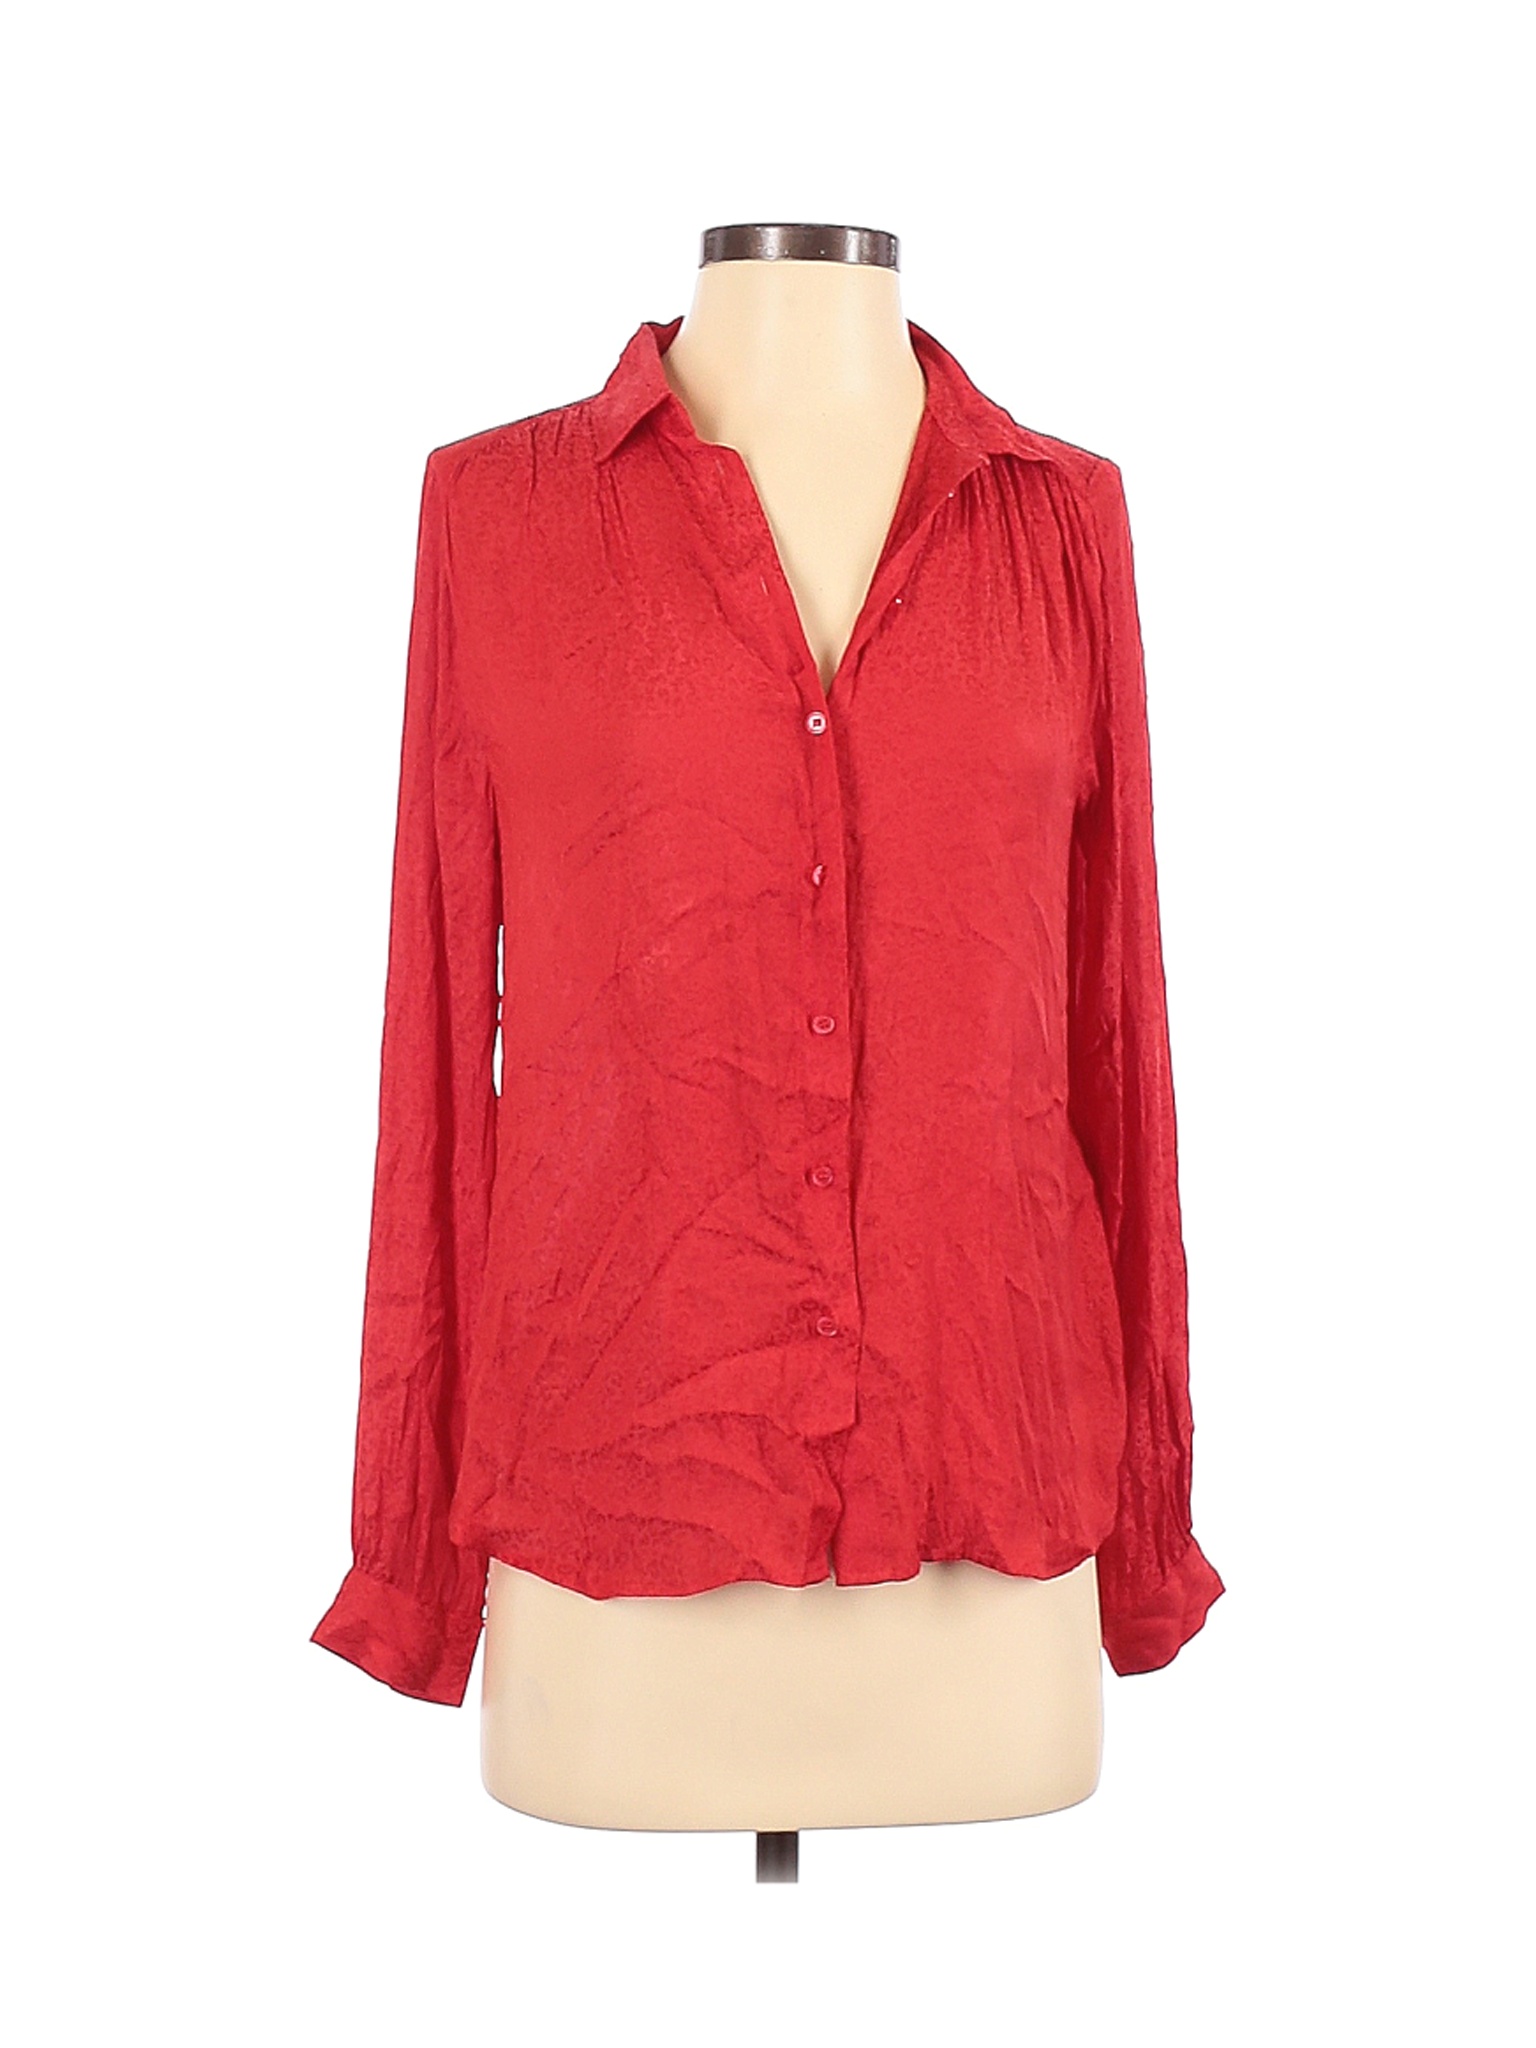 H&M Women Red Long Sleeve Blouse 2 | eBay